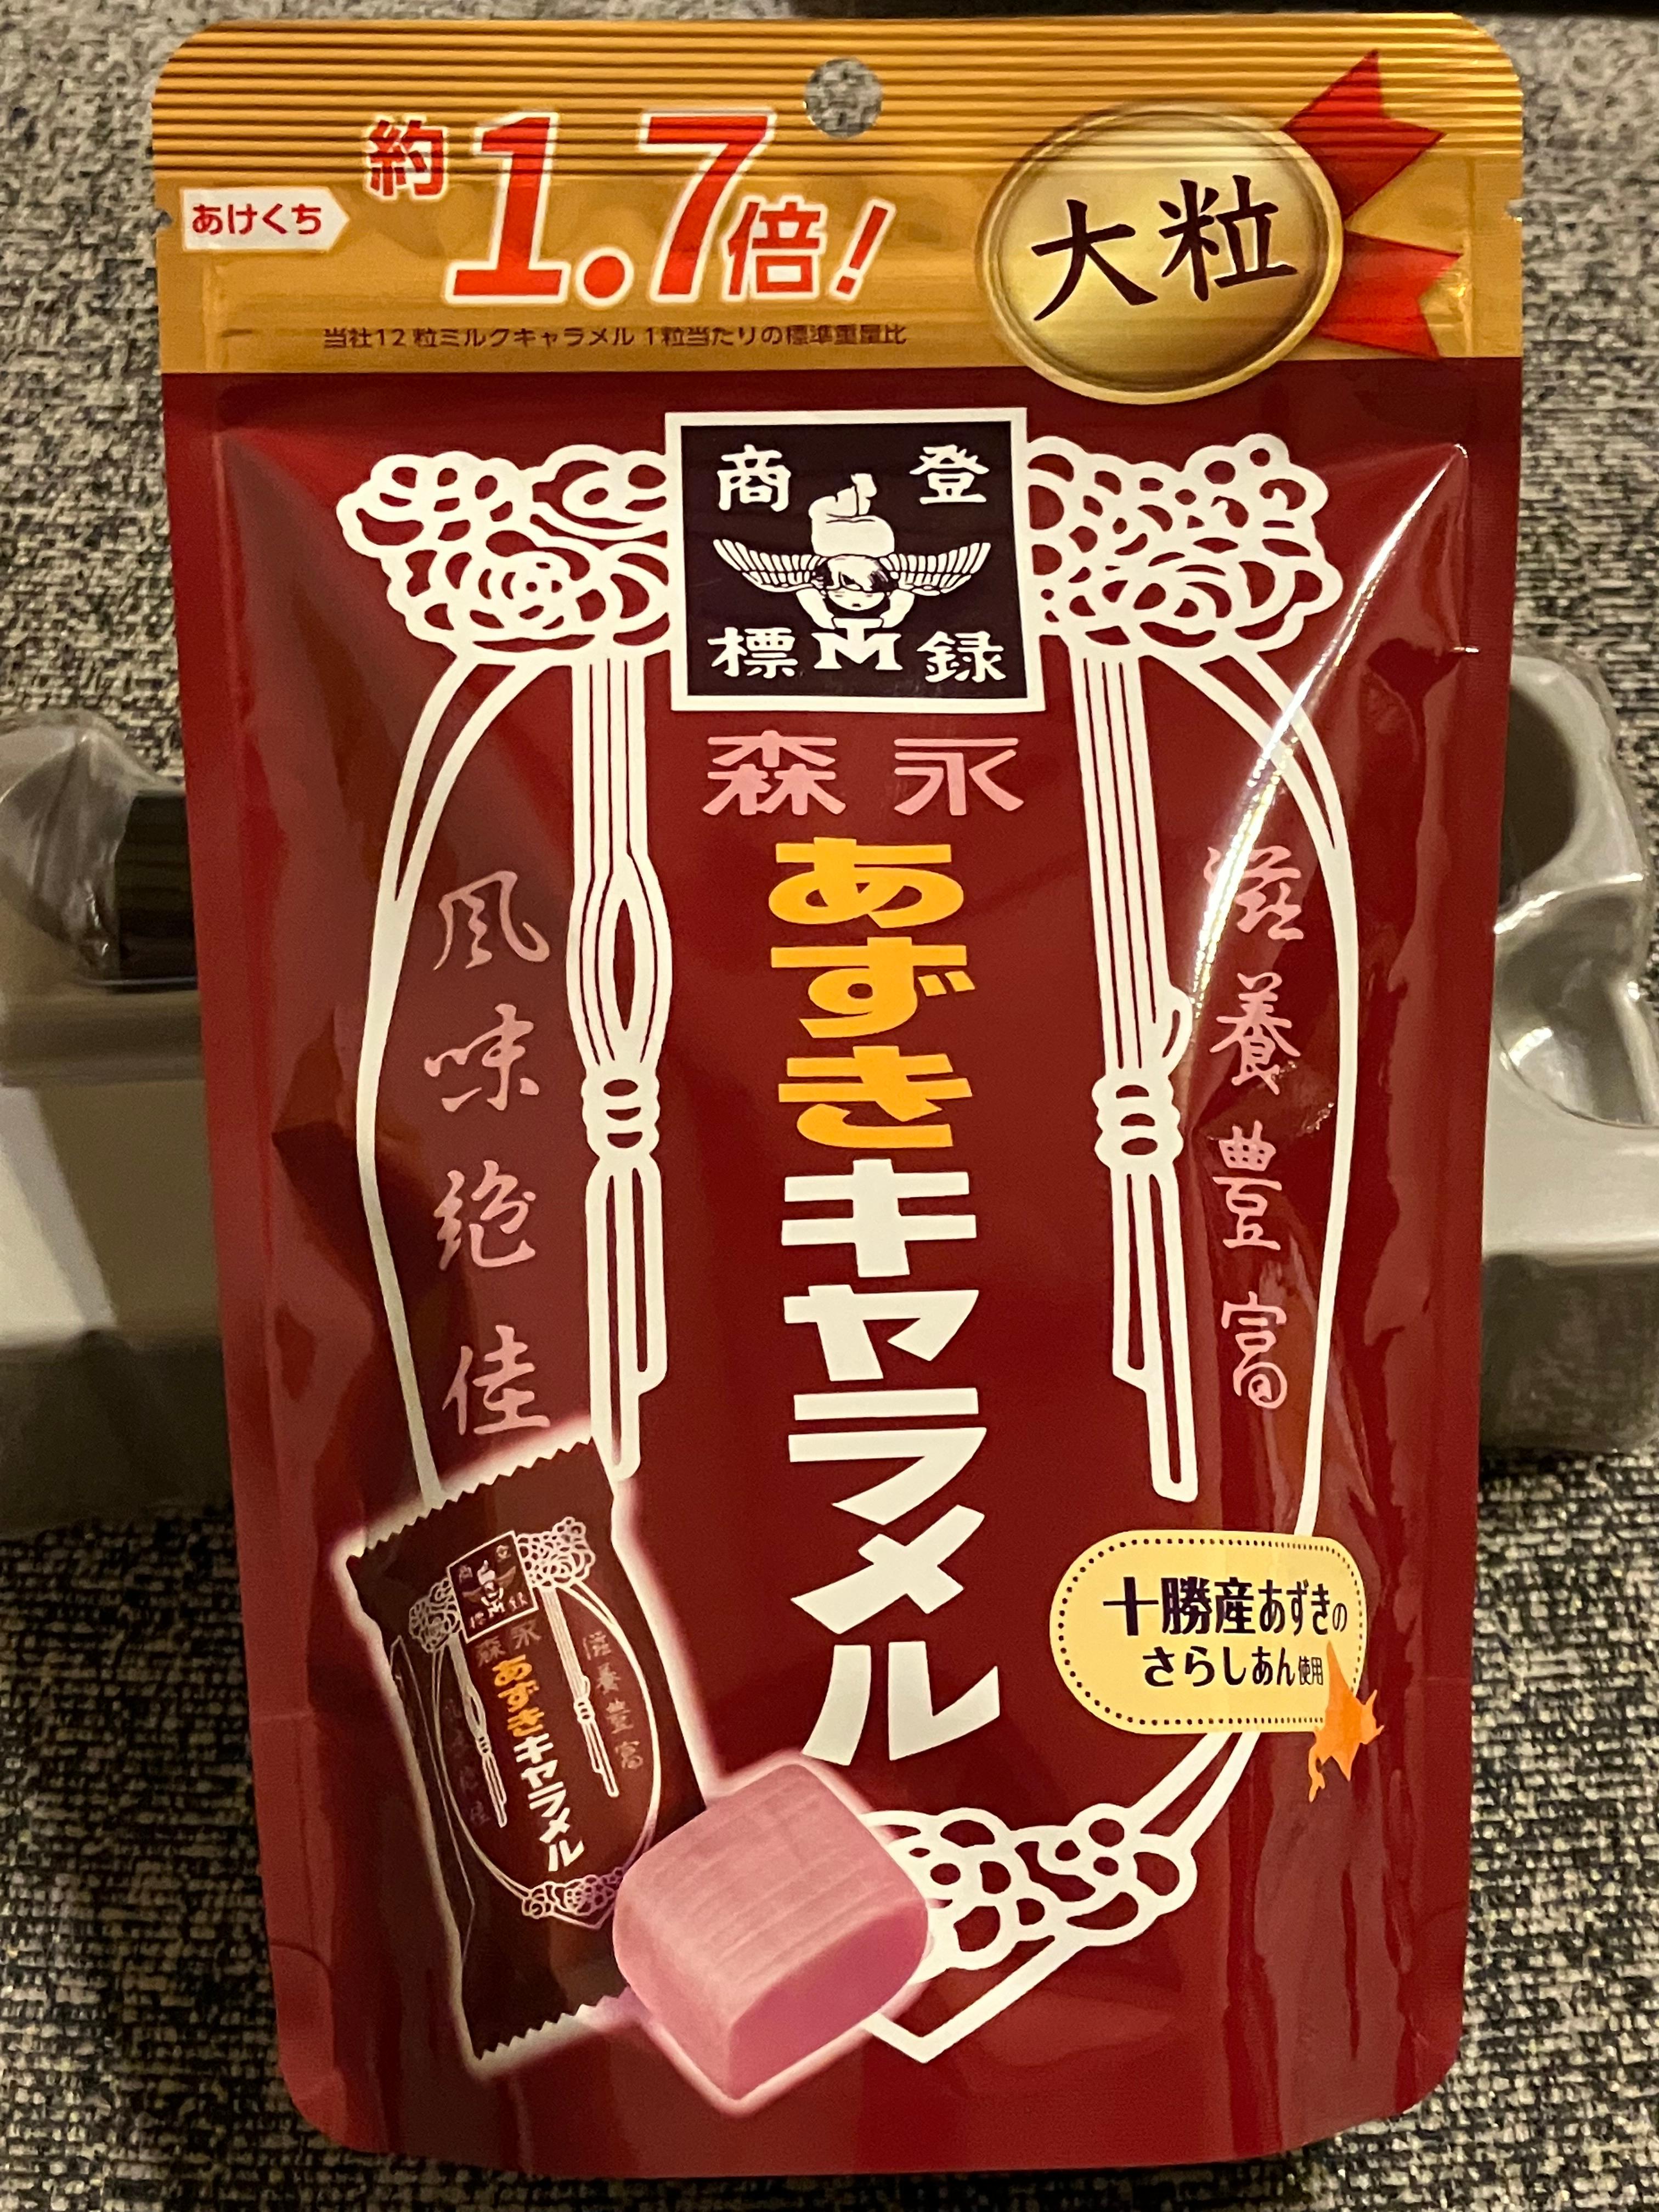 LOHACO - あずきキャラメル大粒 3袋 森永製菓